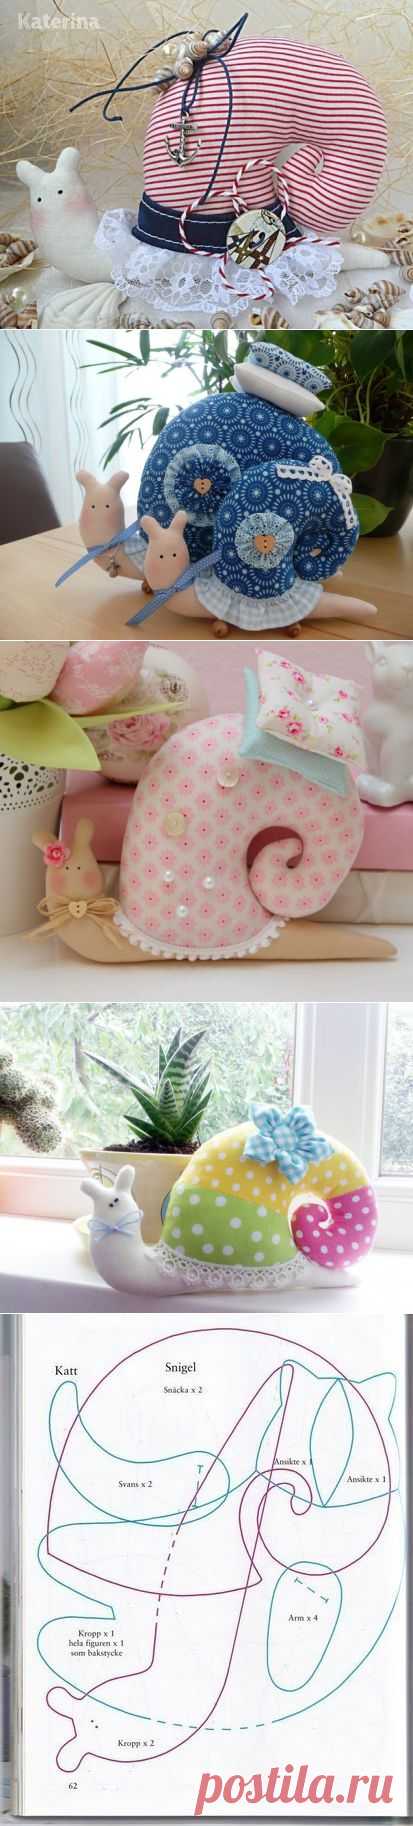 How to Make Cute Fabric Snail Pillow | www.FabArtDIY.com